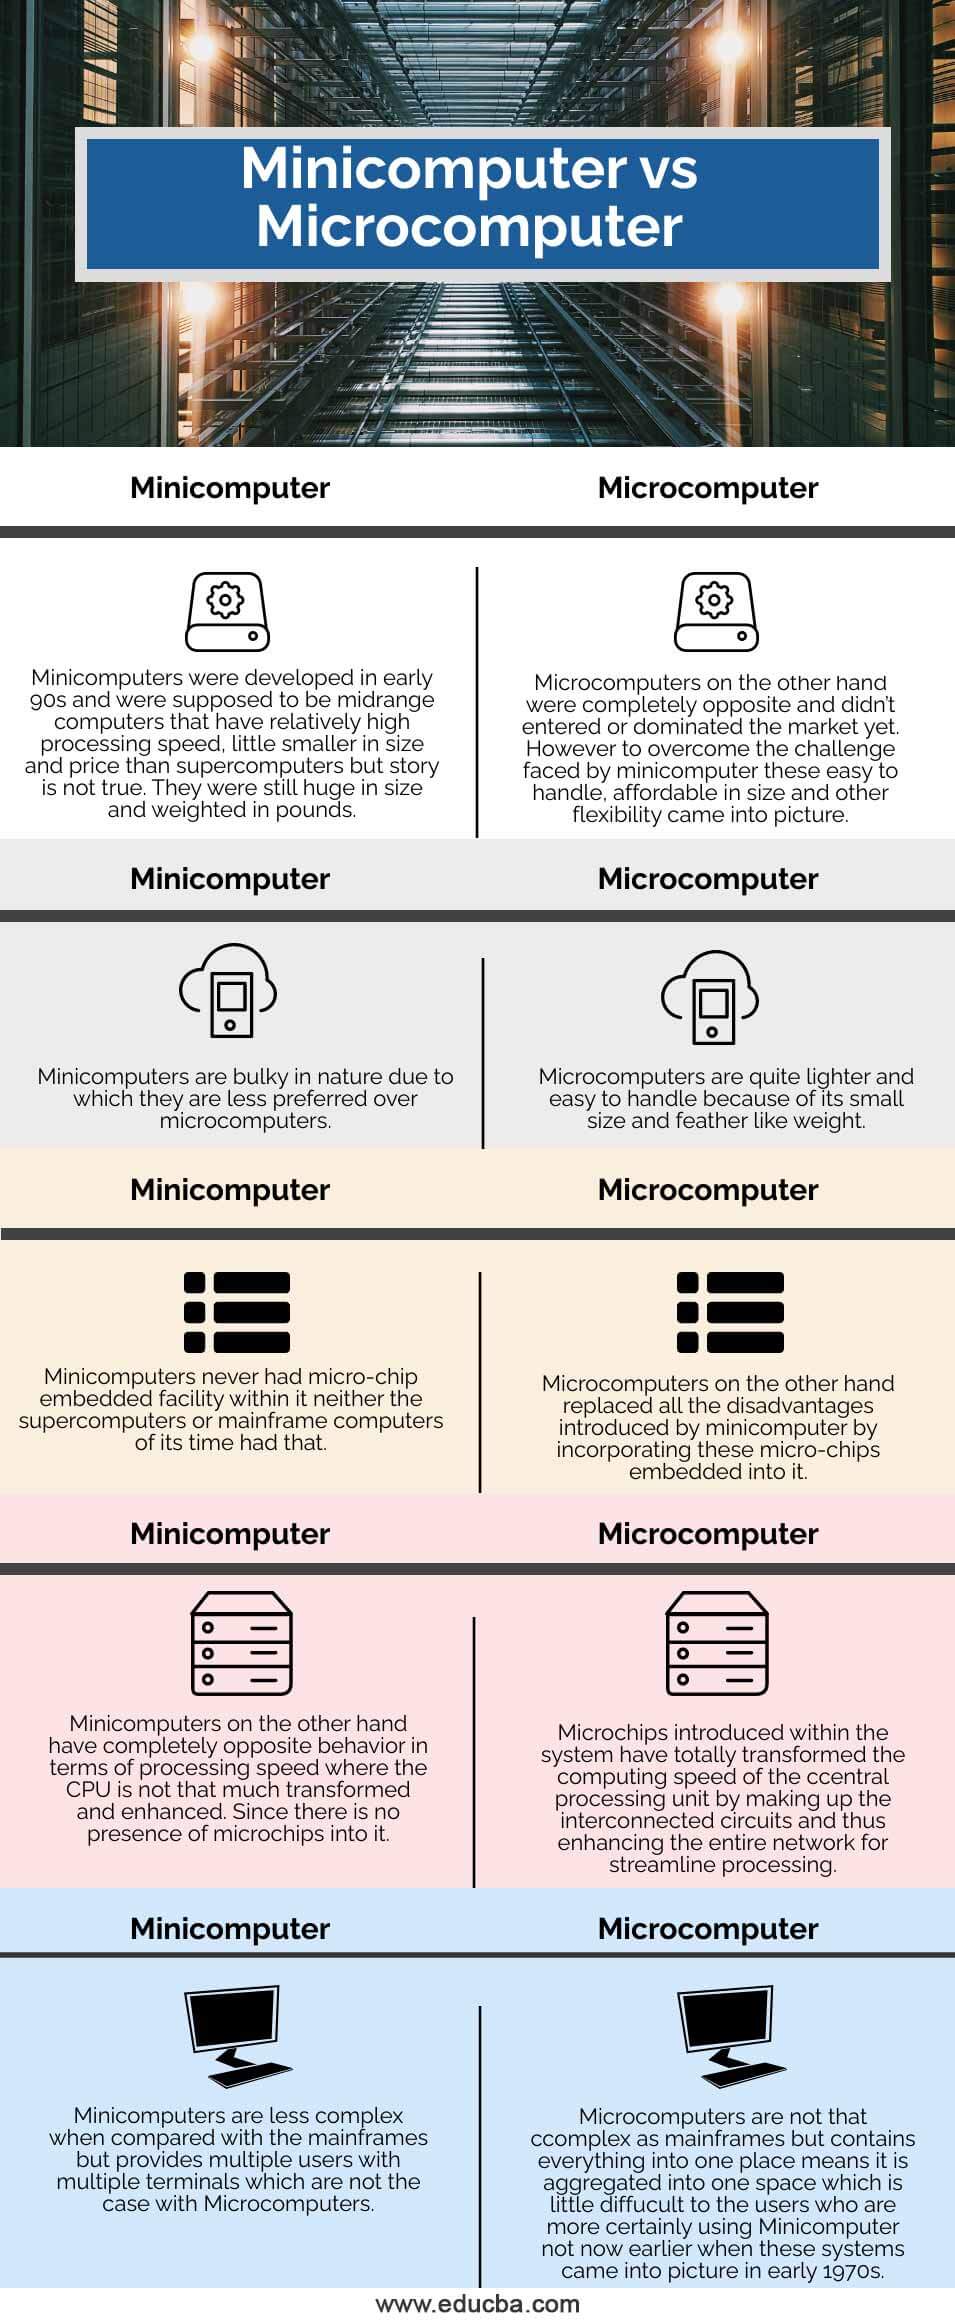 Minicomputer-vs-Microcomputer-info